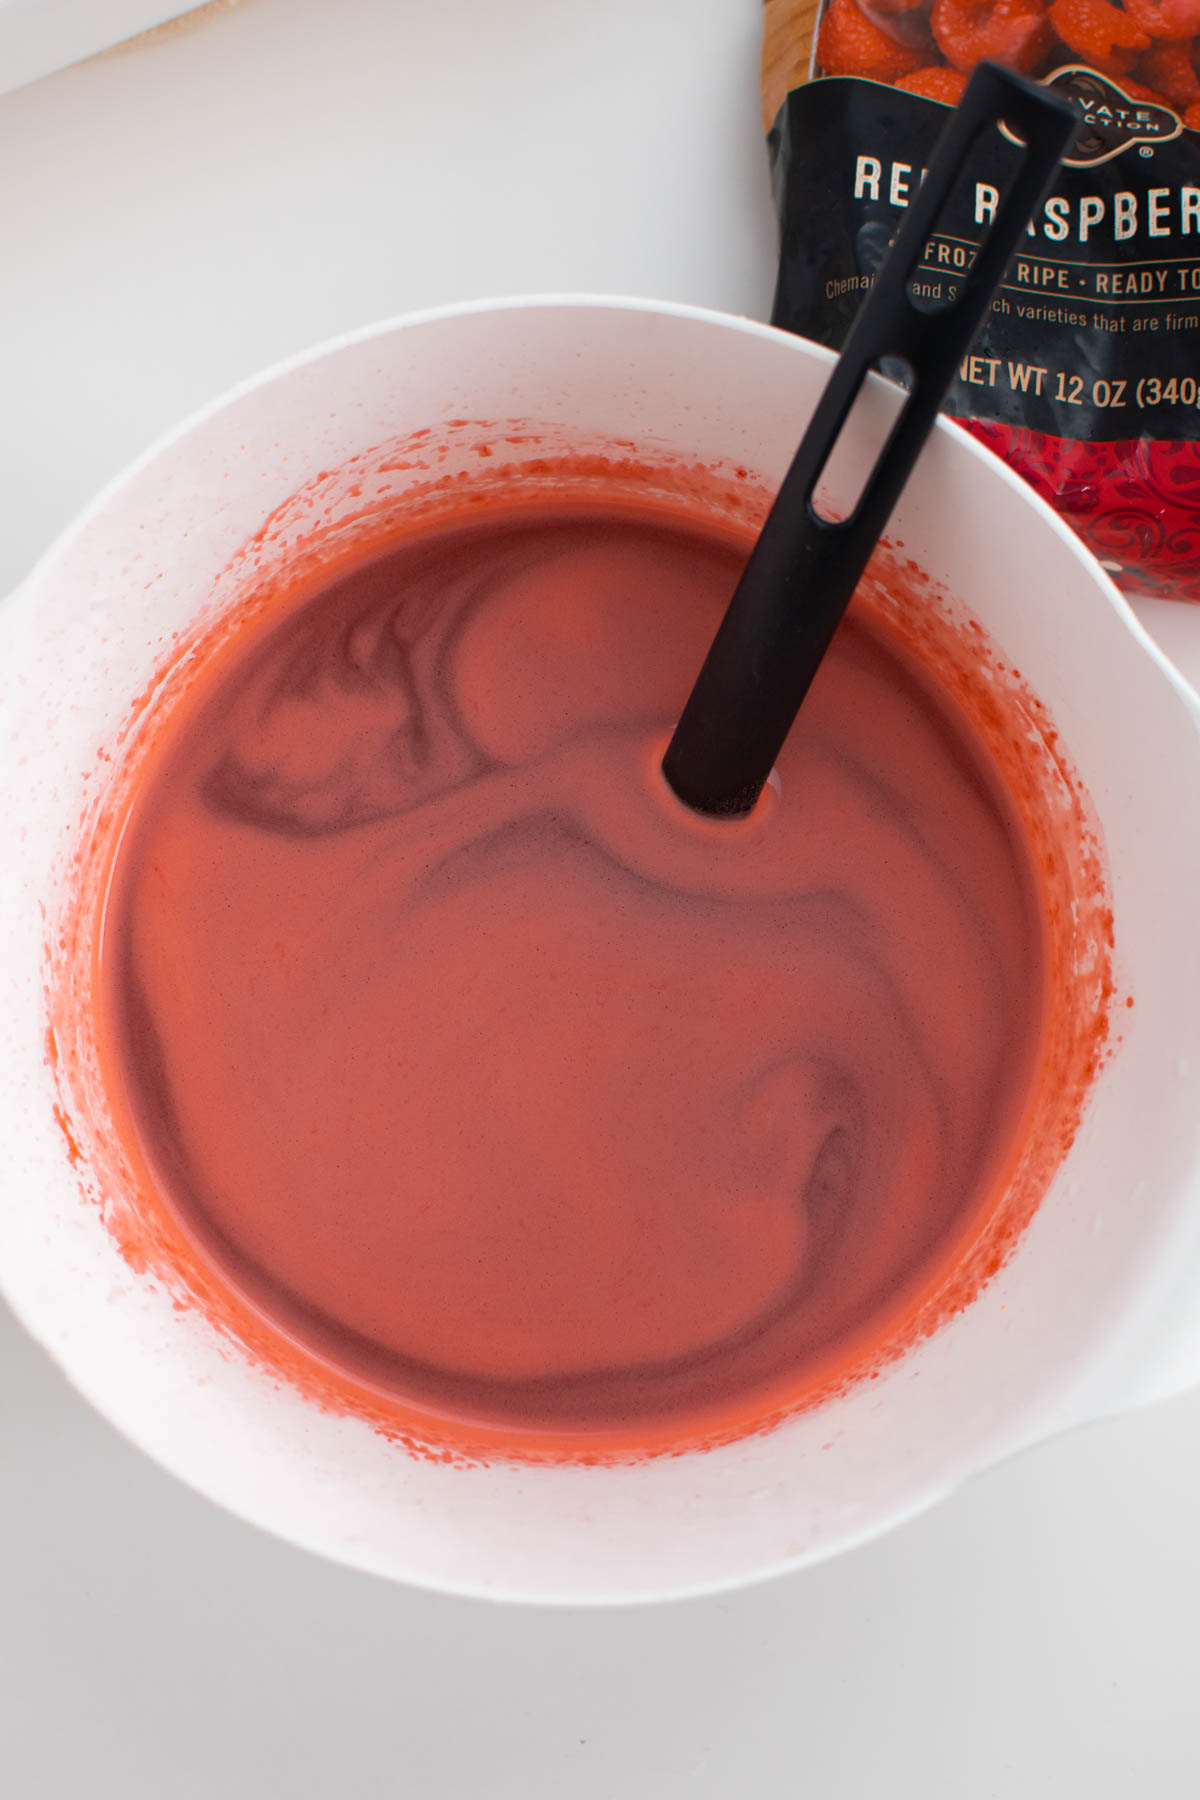 Liquid raspberry Jello in white bowl with black spoon.